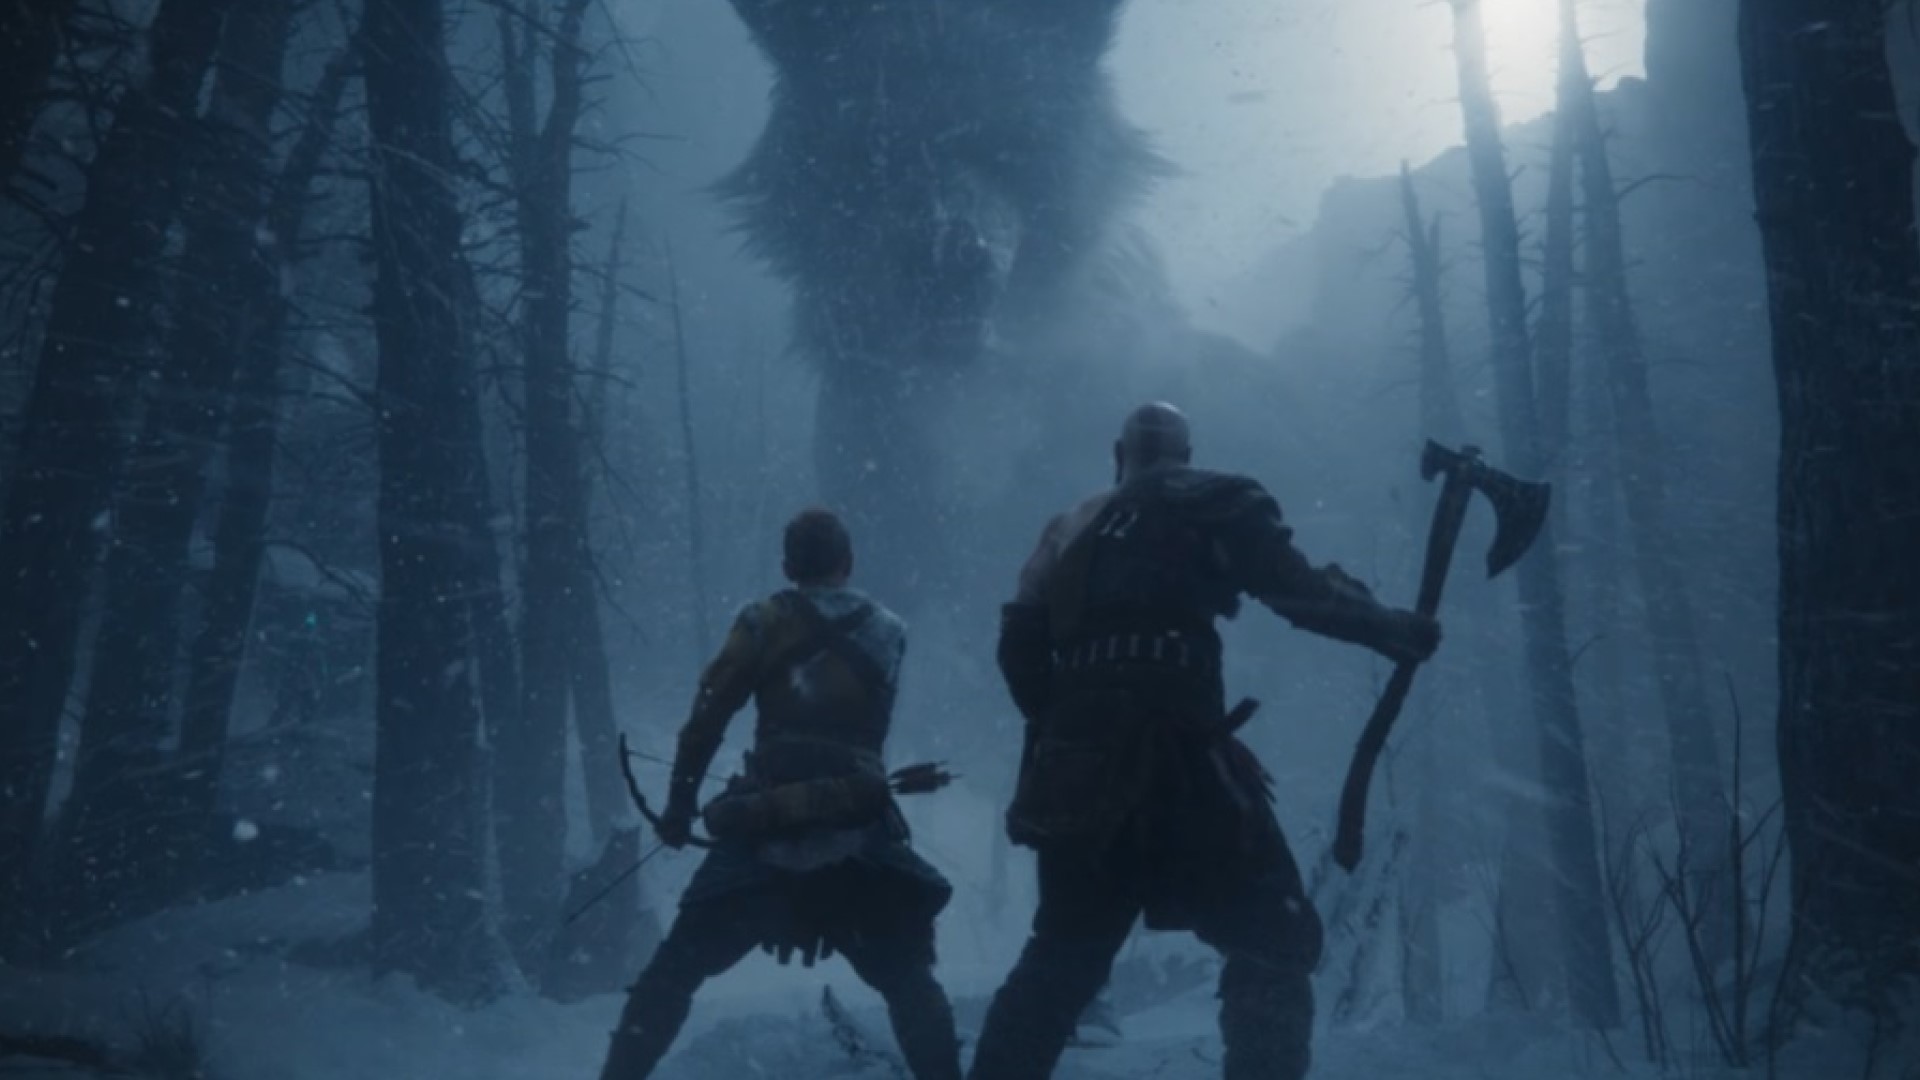 God of War Ragnarok Launches November 9